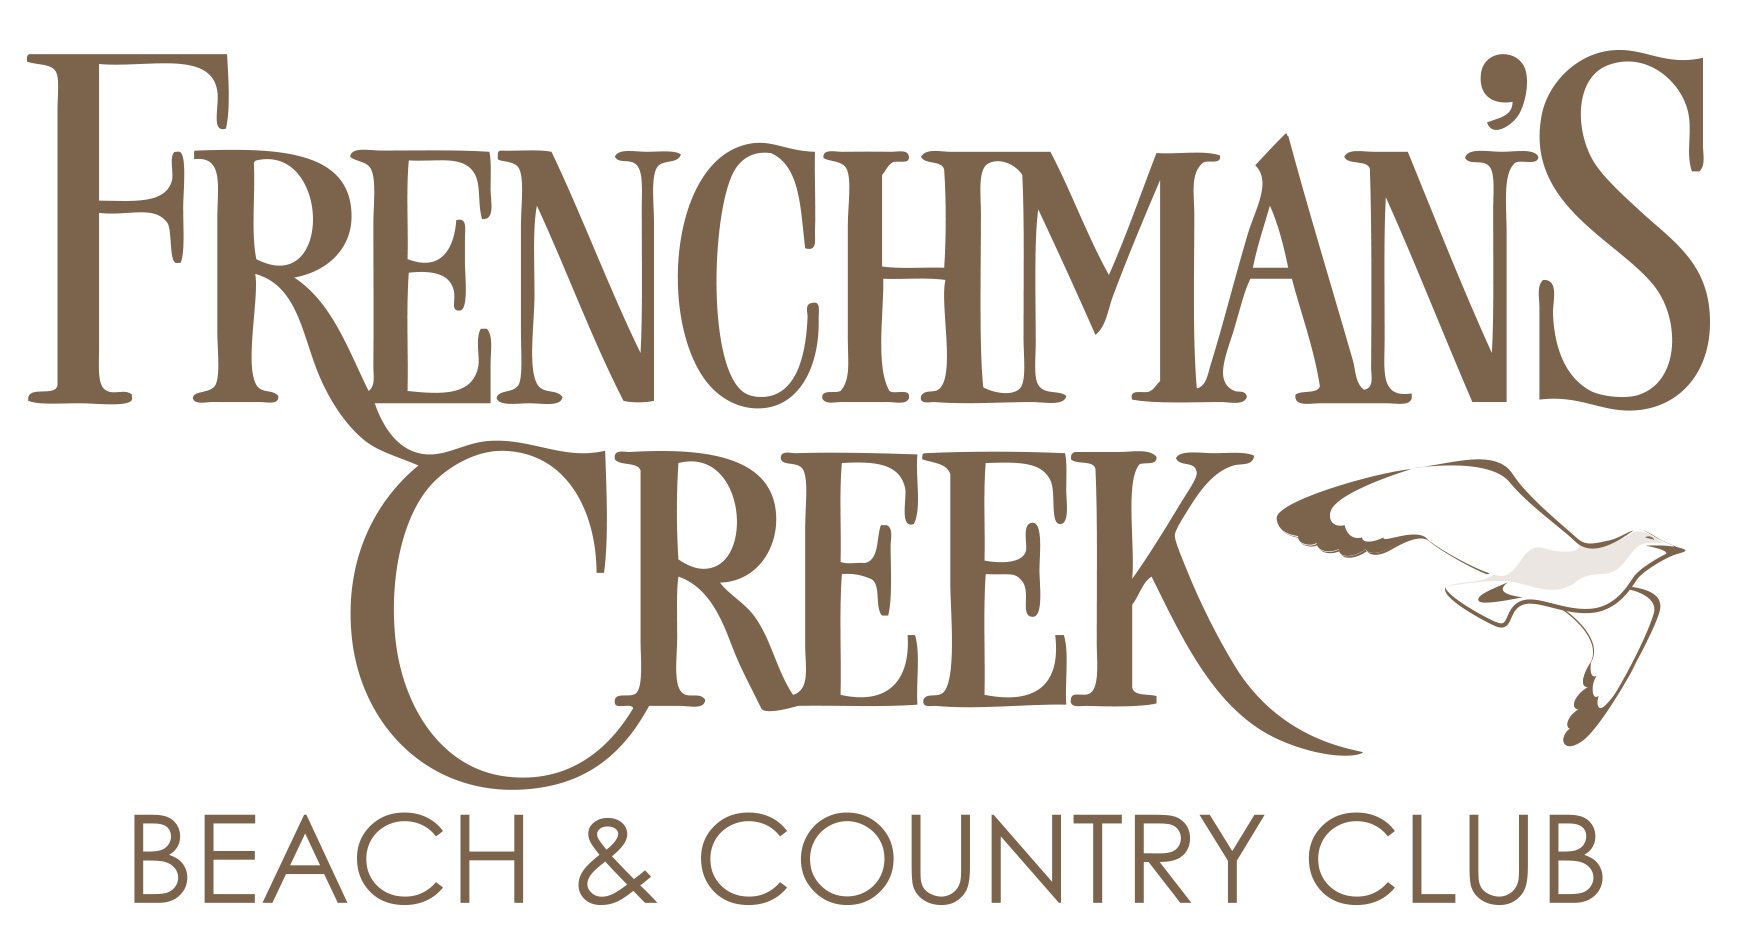 Frenchman's Creek Beach & Country Club logo